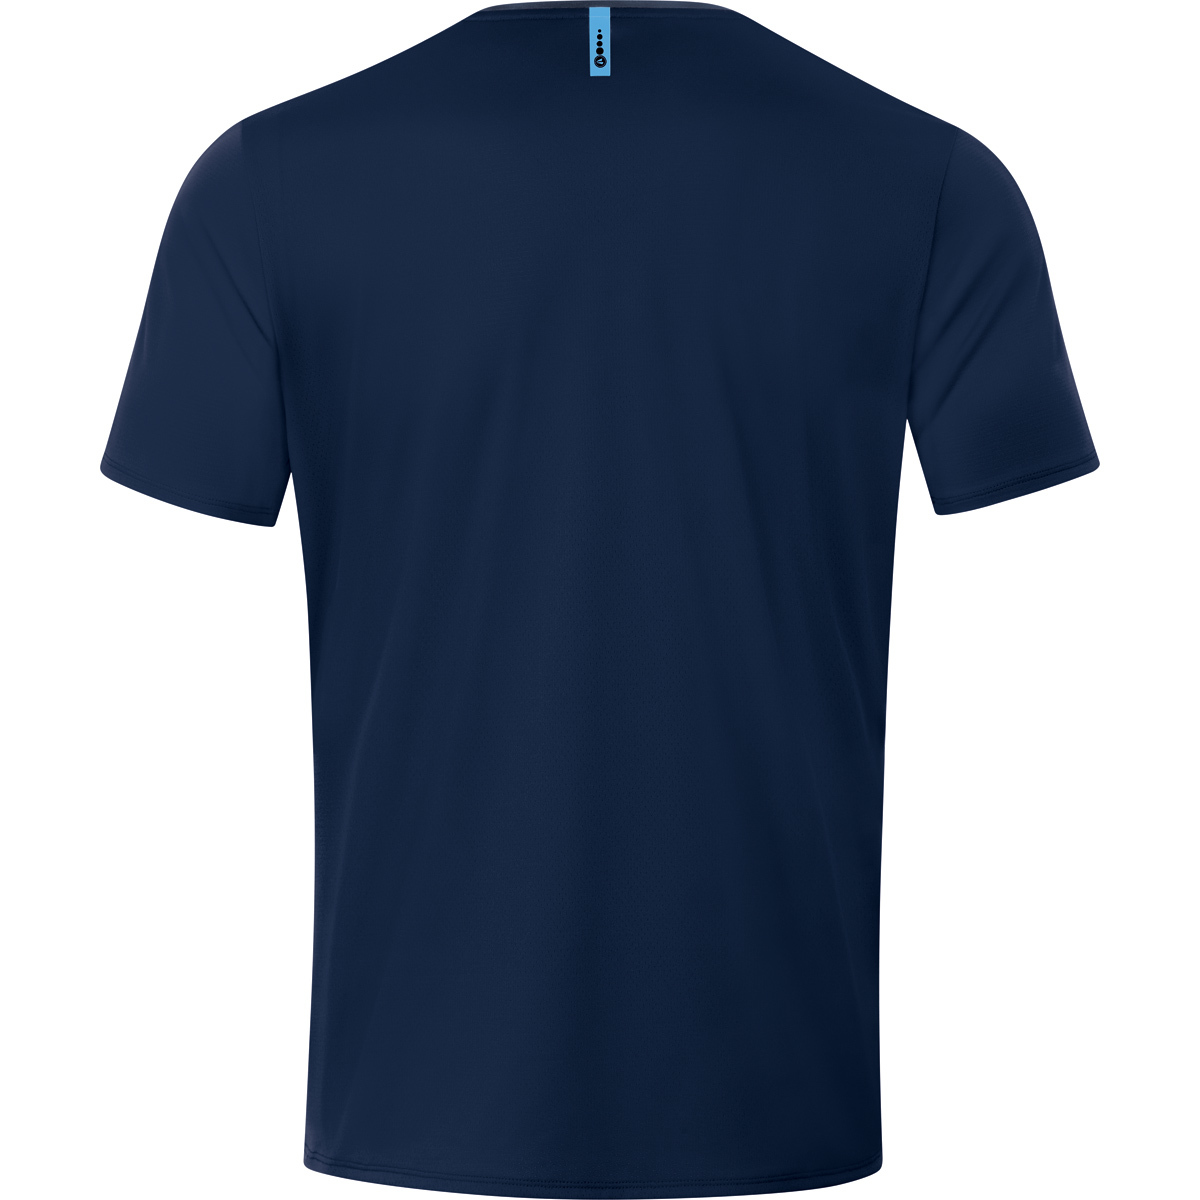 T-Shirt 6120 Gr. Champ Kinder, JAKO marine/darkblue/skyblue, 2.0 116,